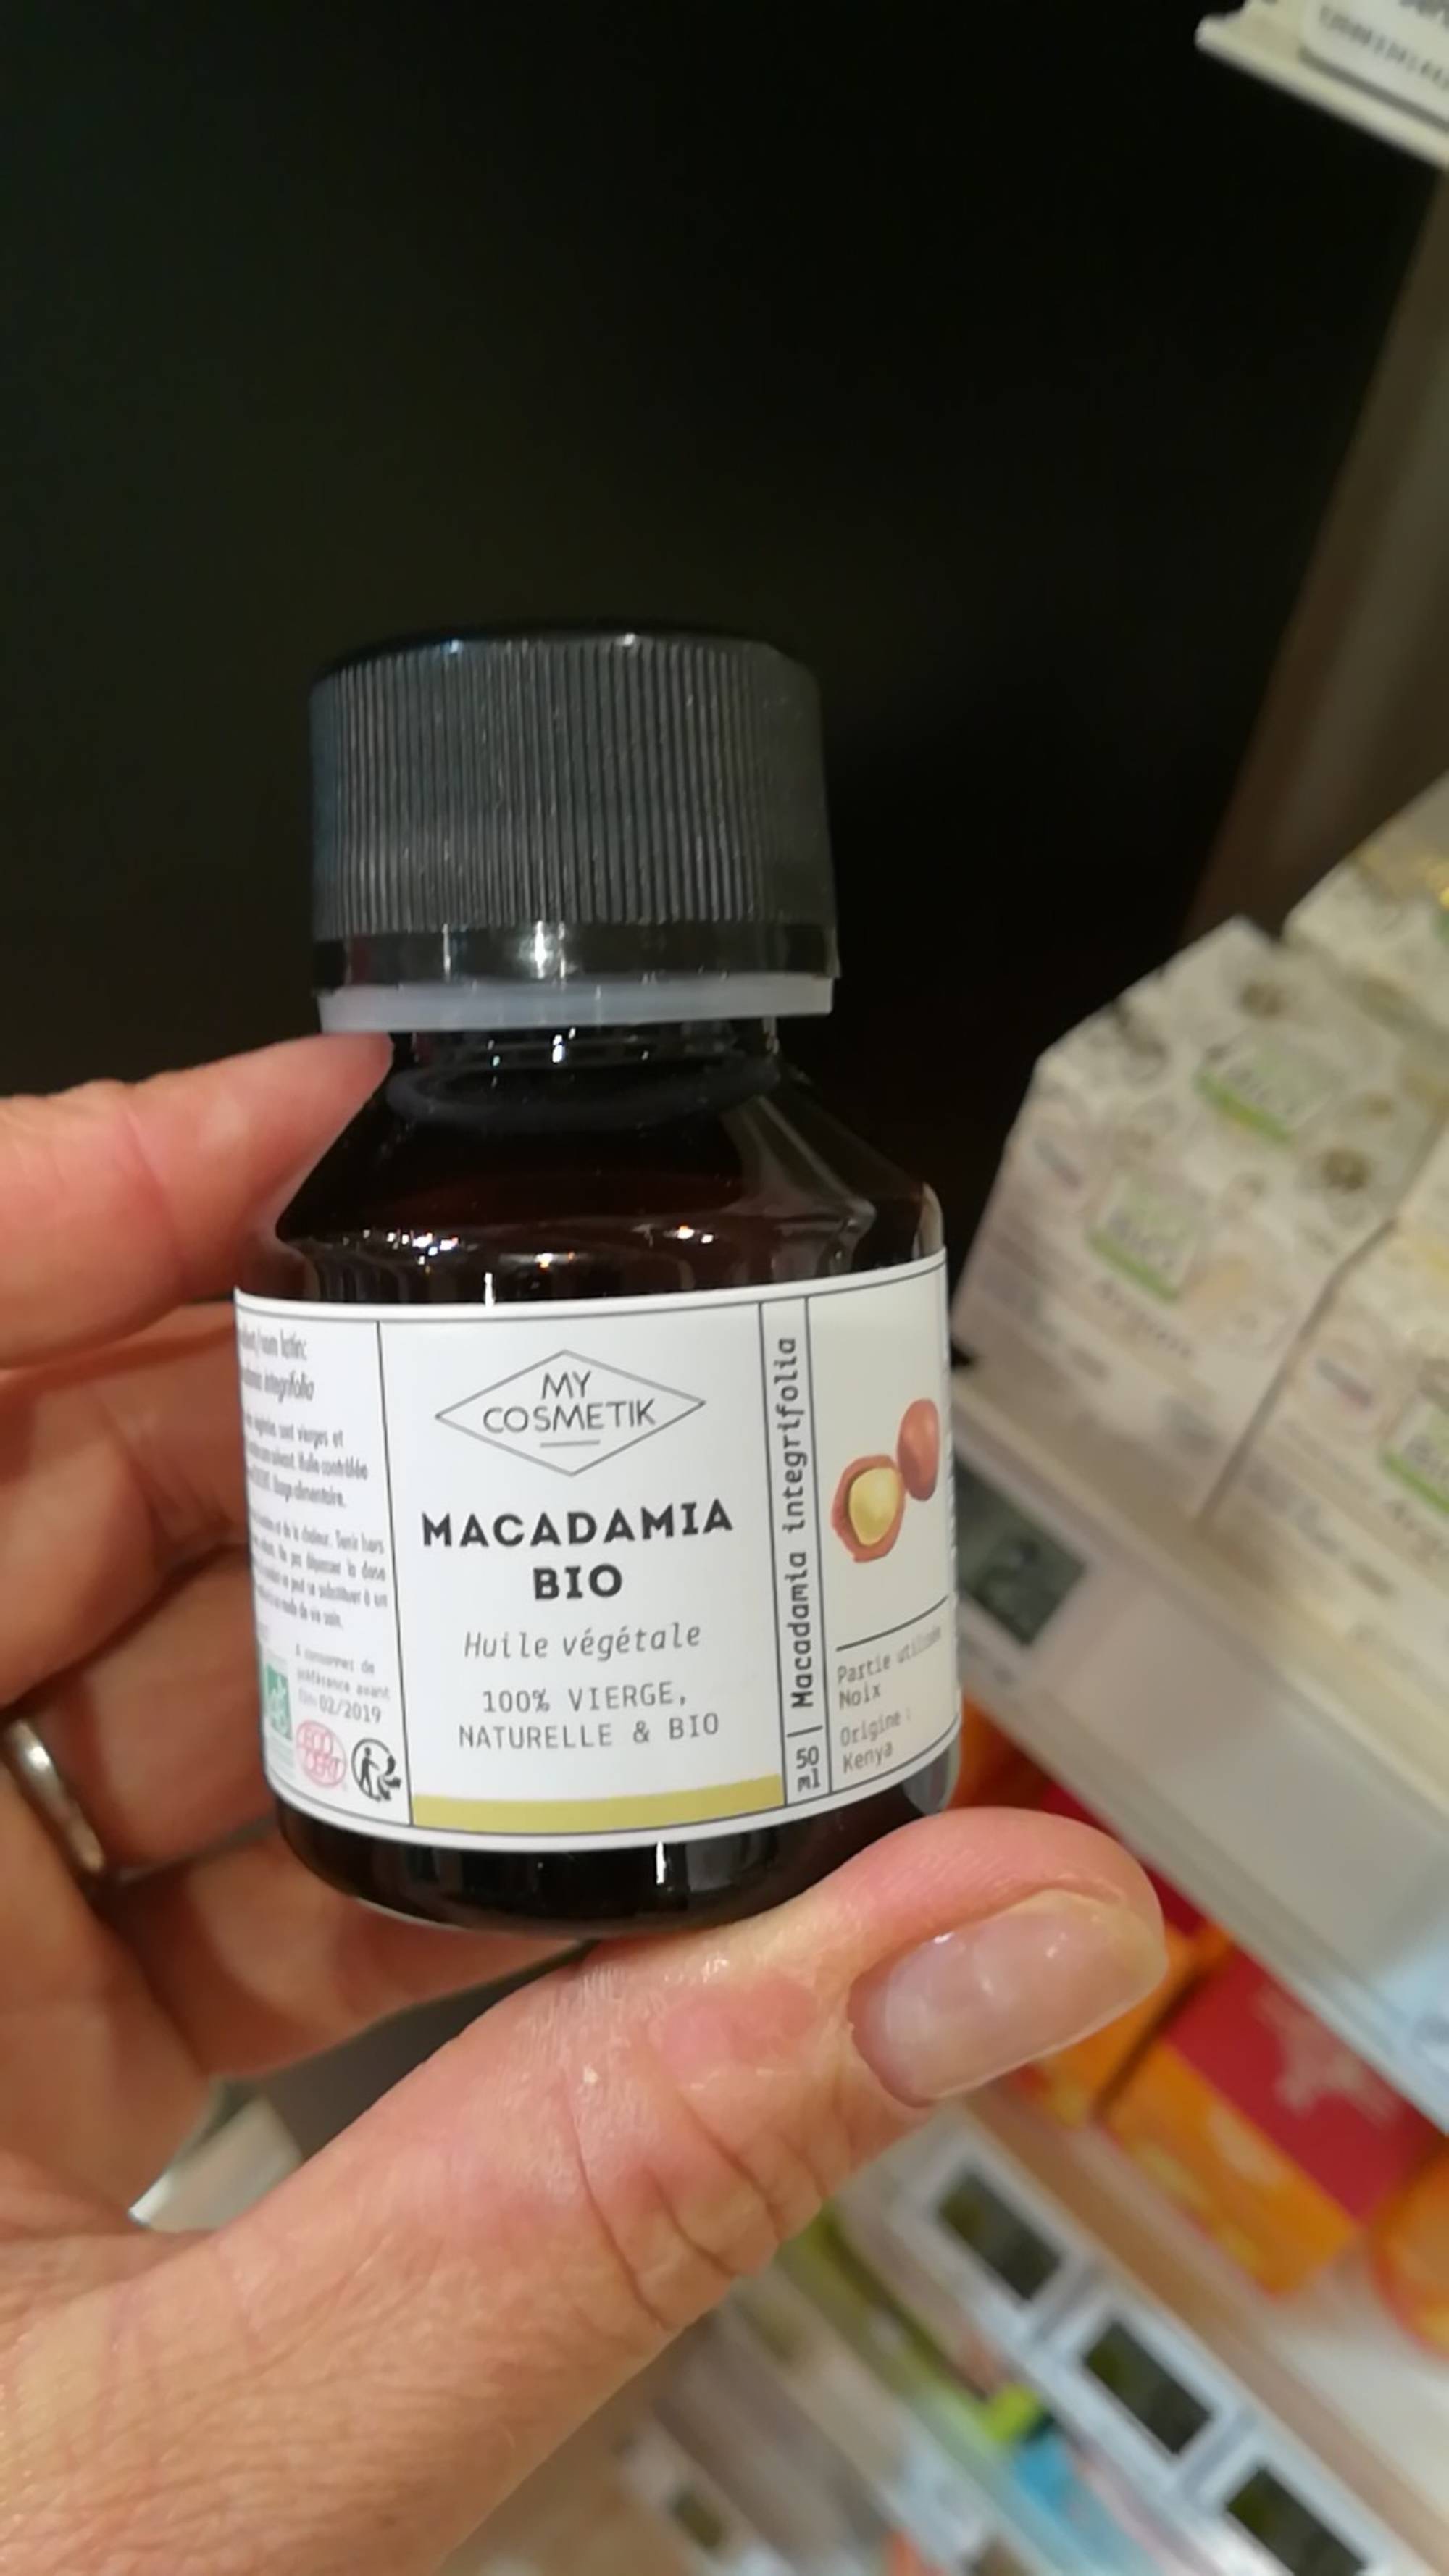 MY COSMETIK - Macadamia bio - Huile végétale